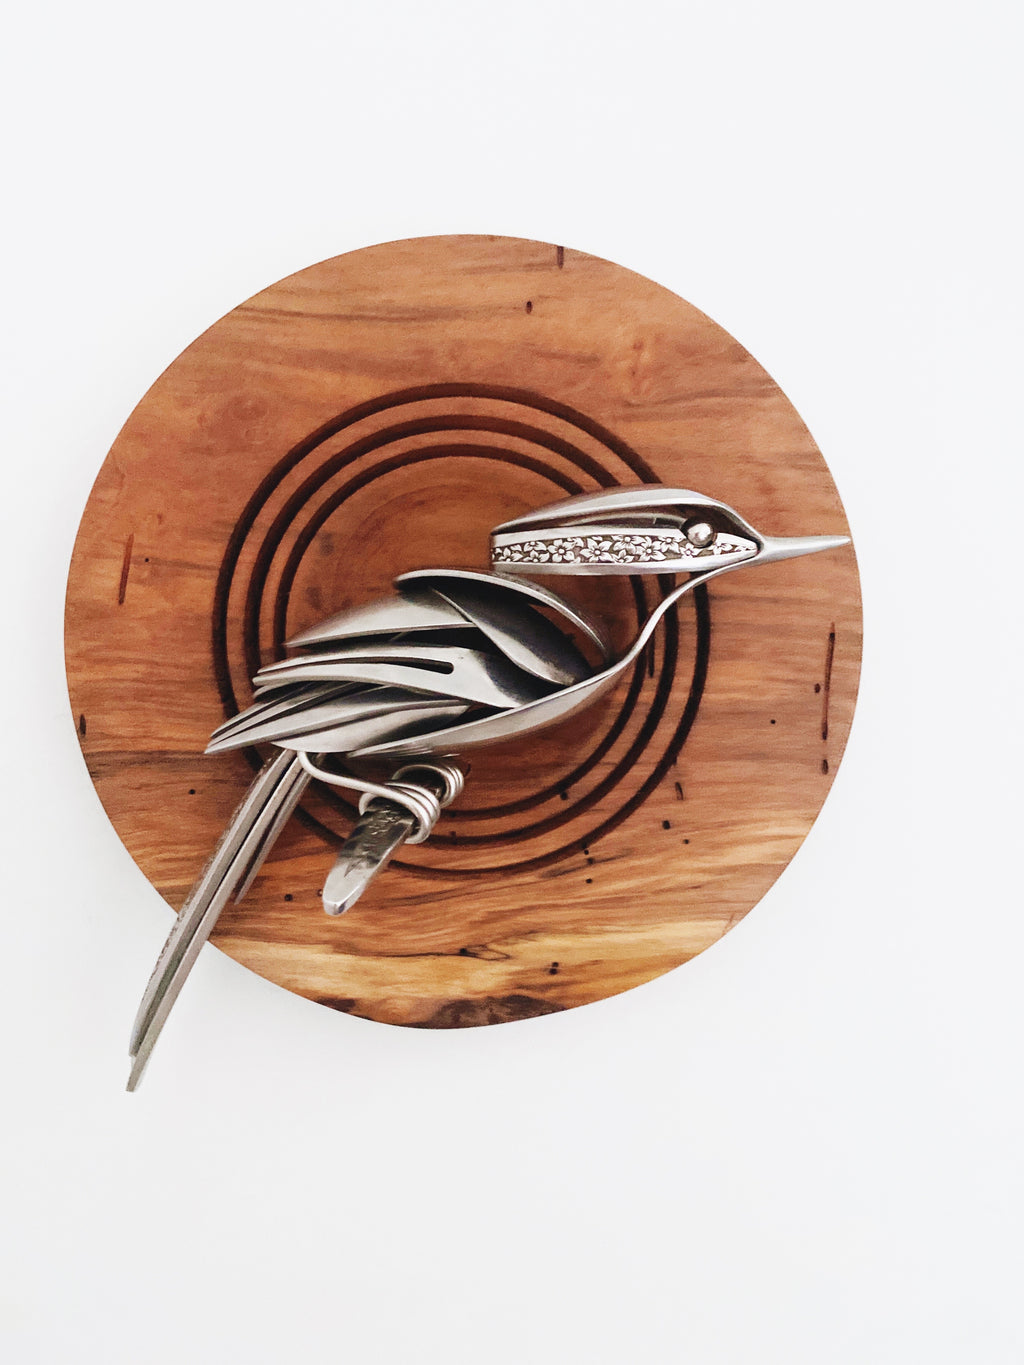 "Emily" - Metal Bird Sculpture